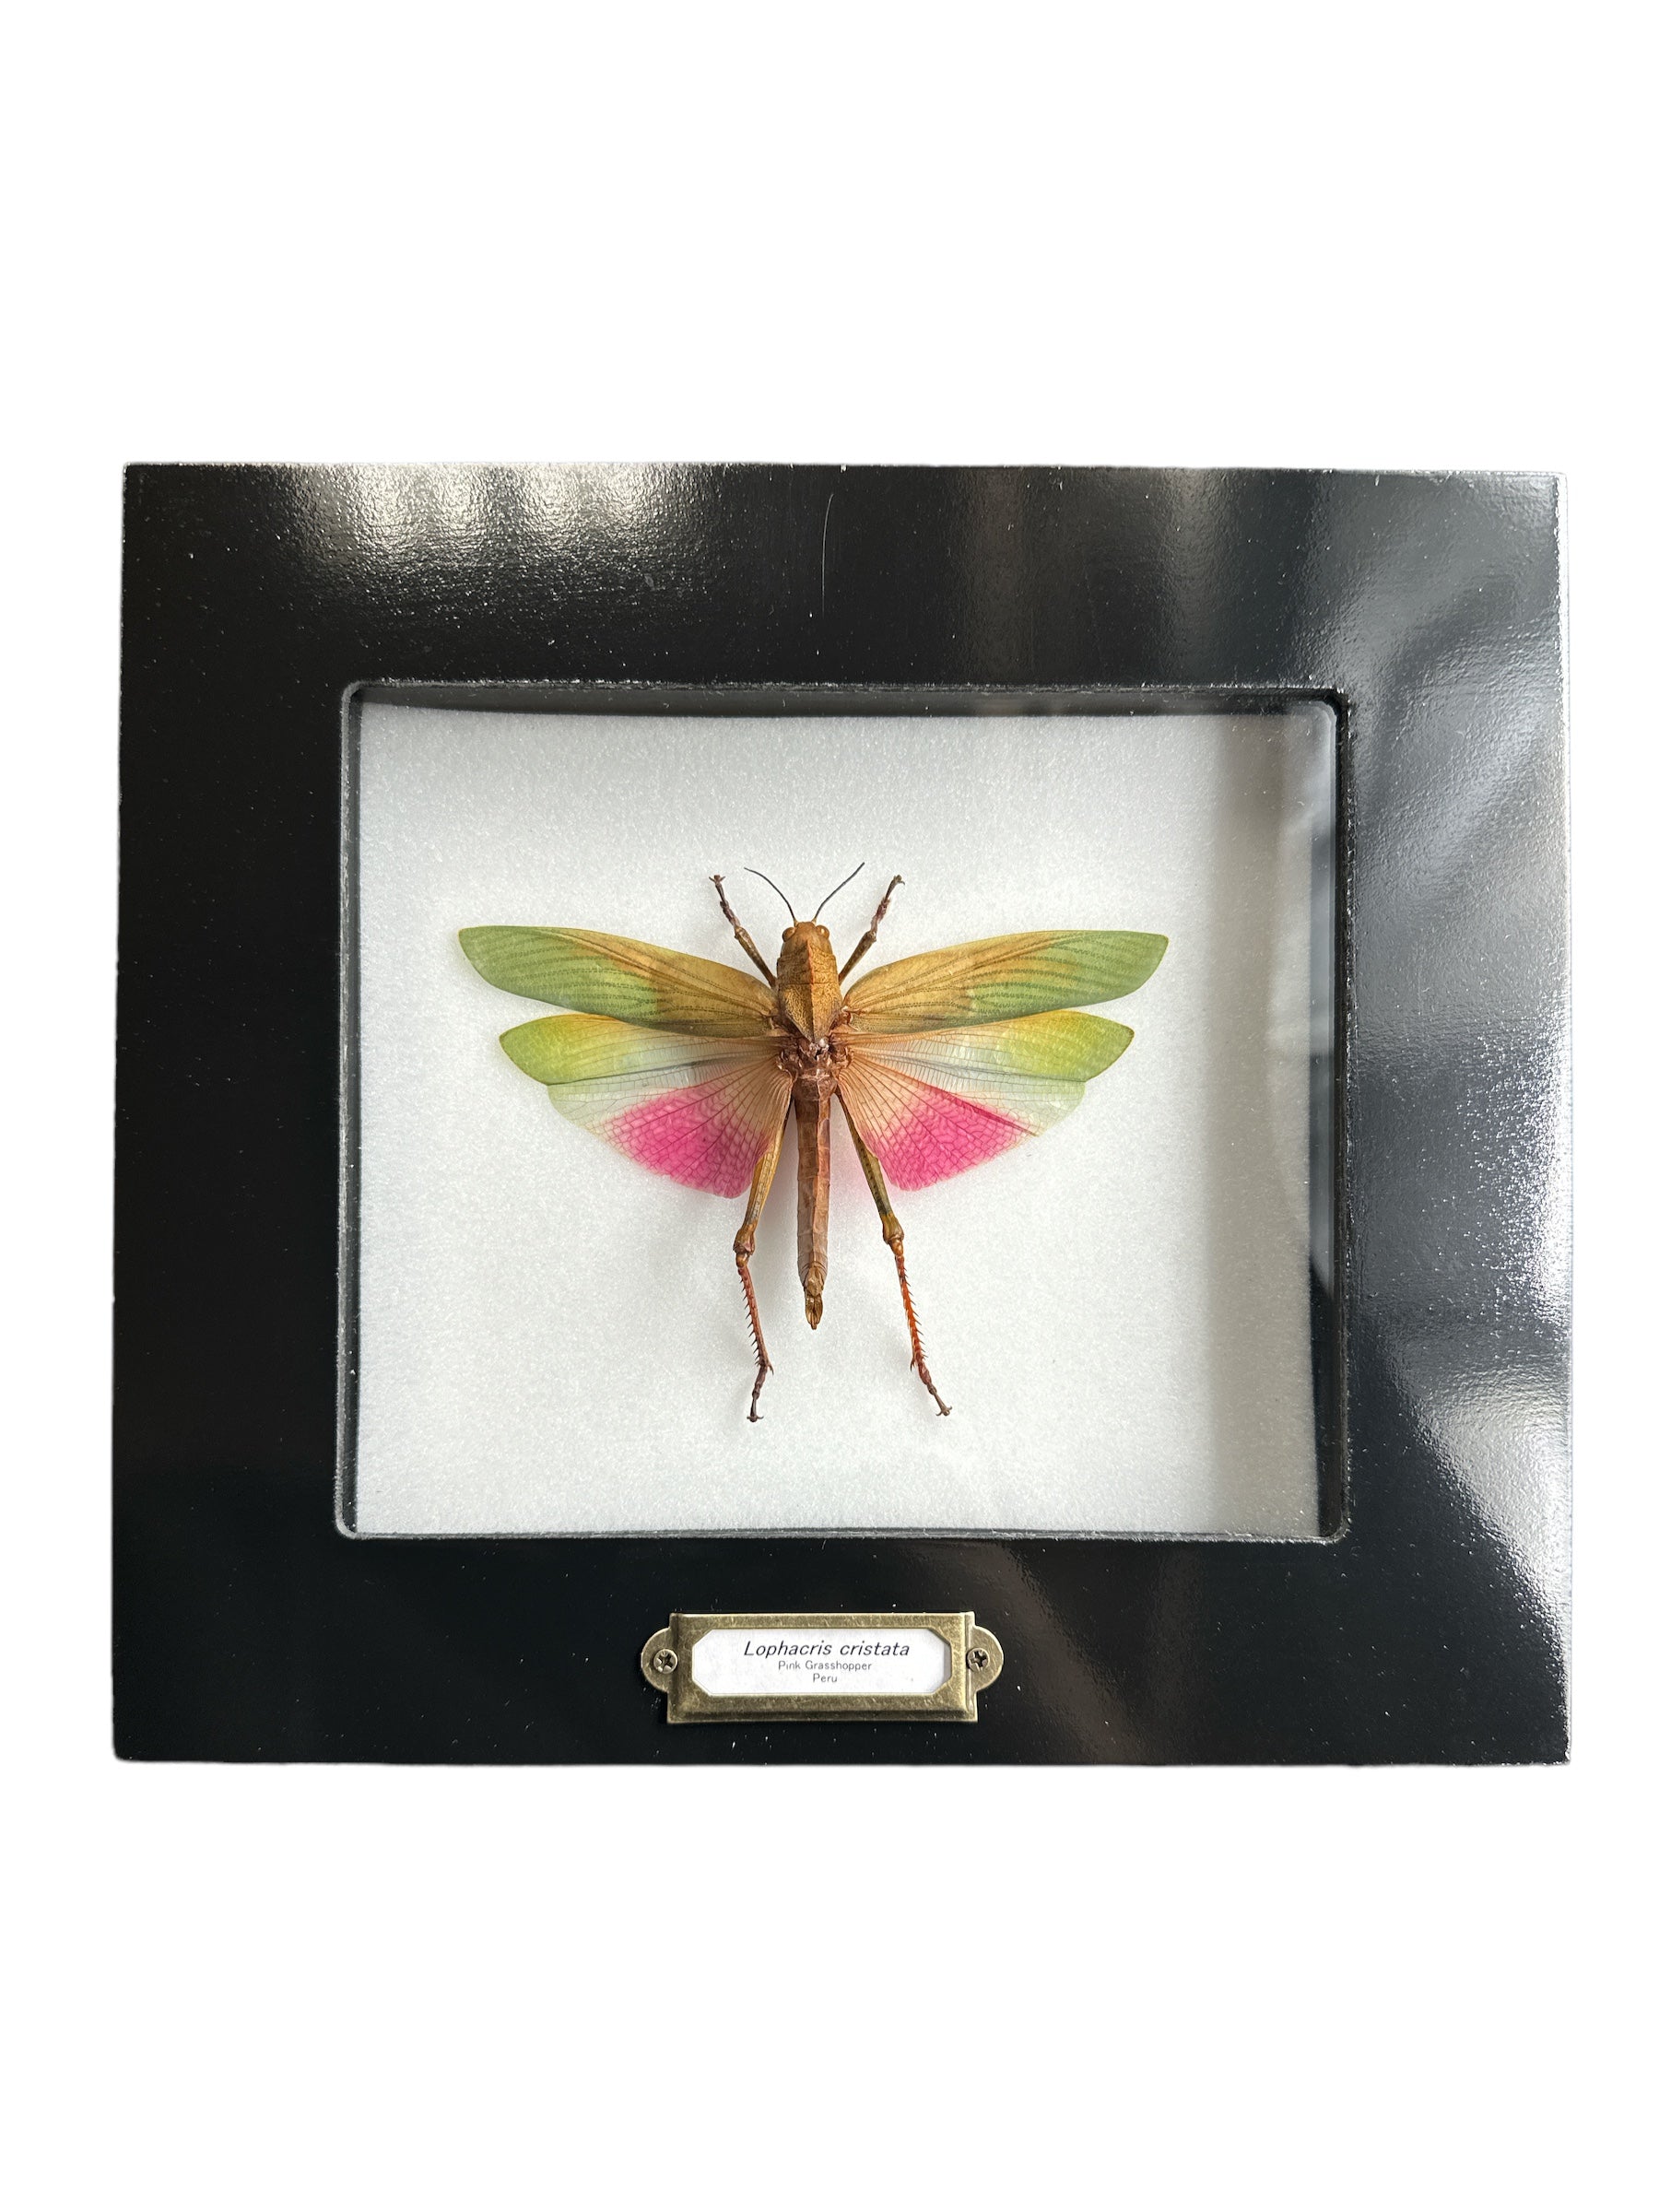 Pink Grasshopper - Female (Lophacris cristata) - 5x6" Frame